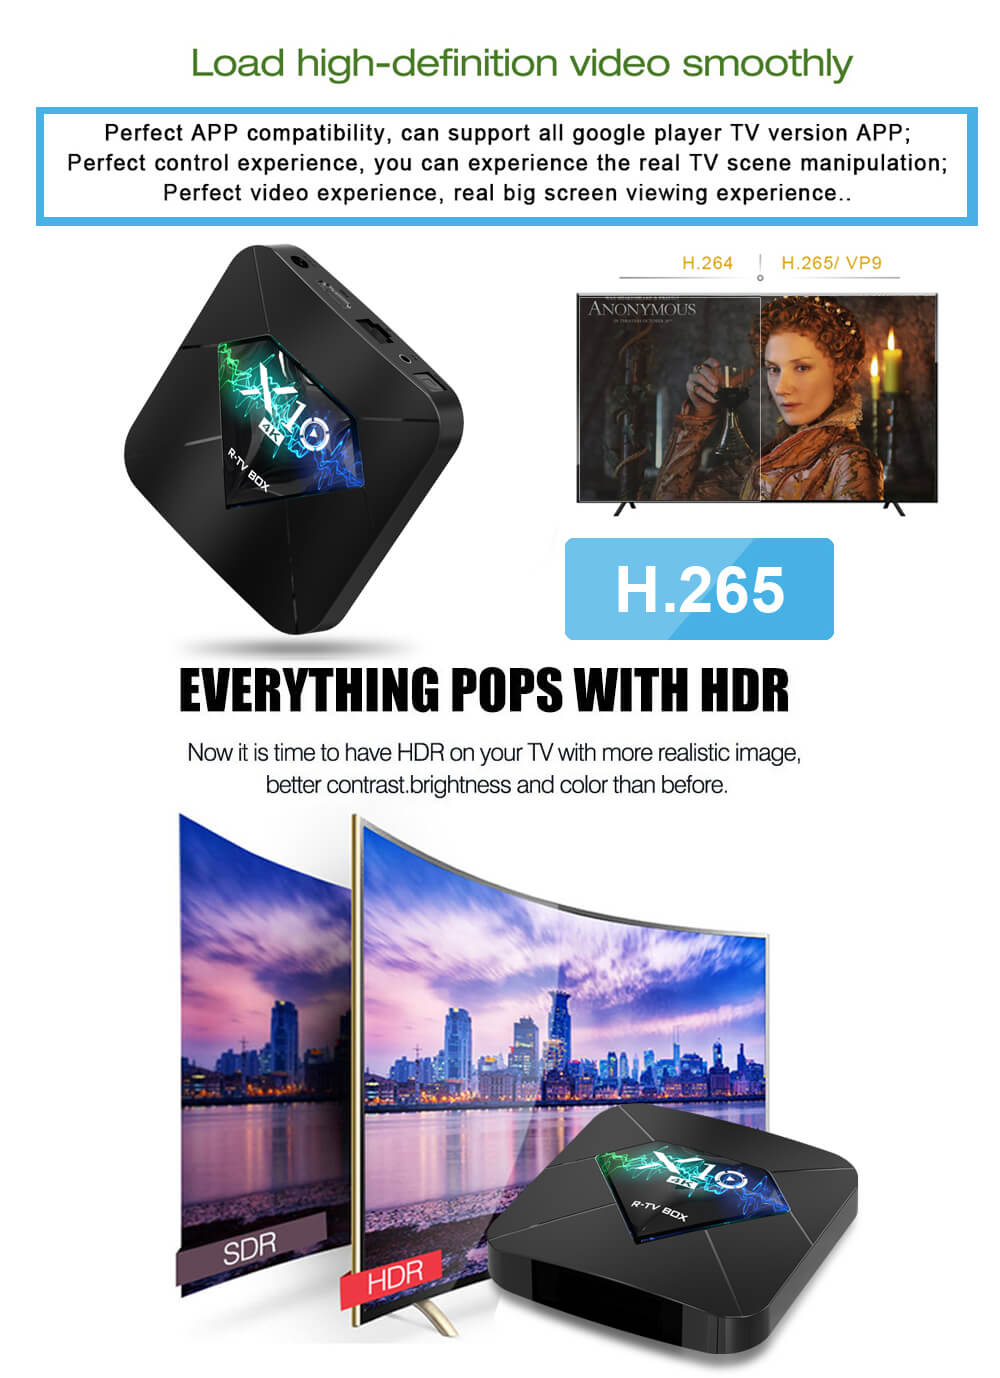 Good Looking Design Android TV BOX, 2G 16G Quad Core Smart TV Box